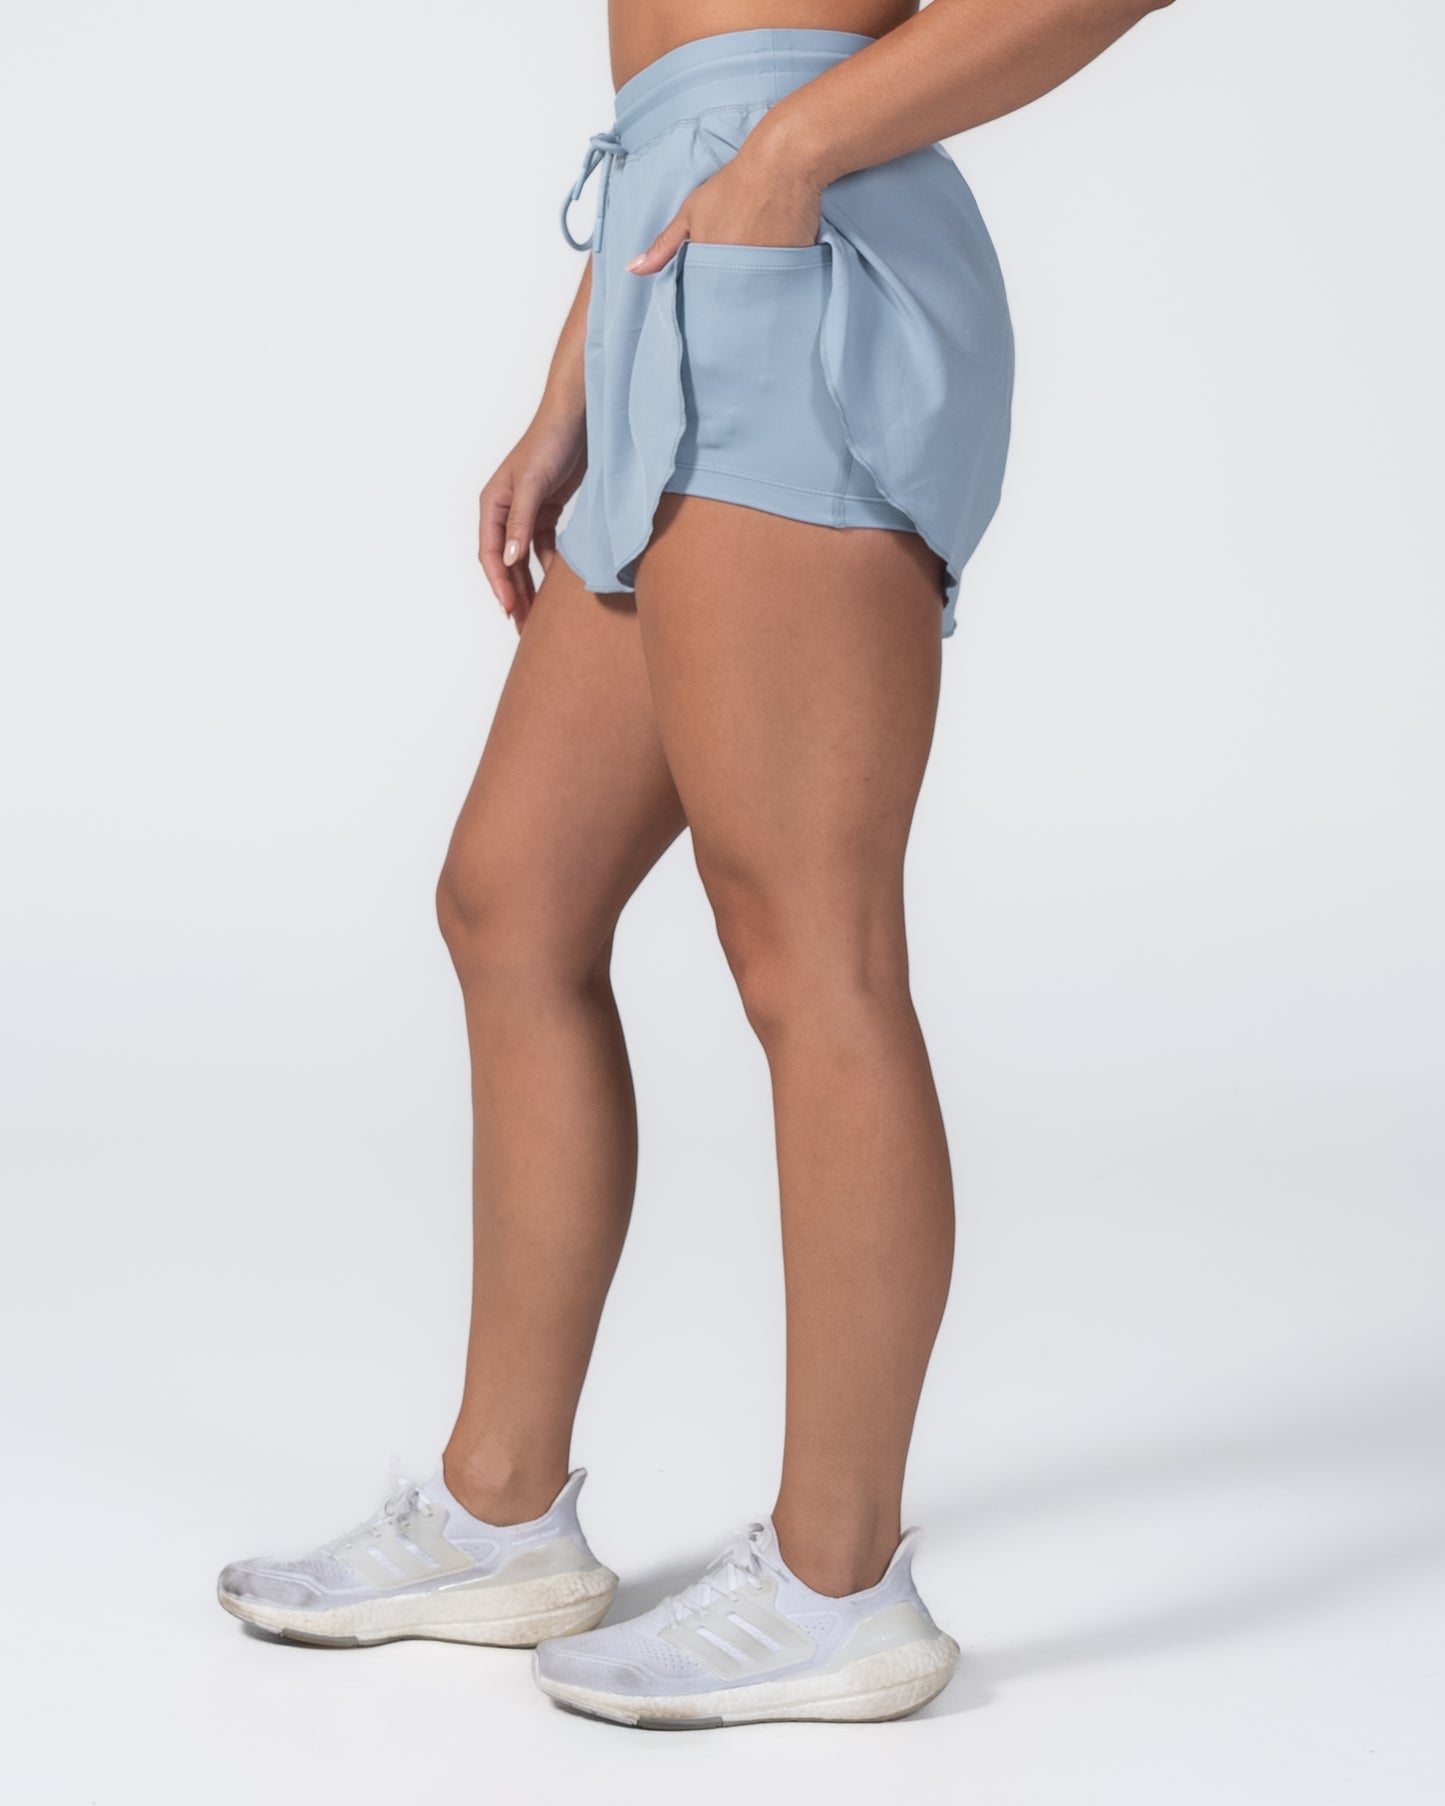 MM Madeline Shorts - Steel Blue - FINAL SALE